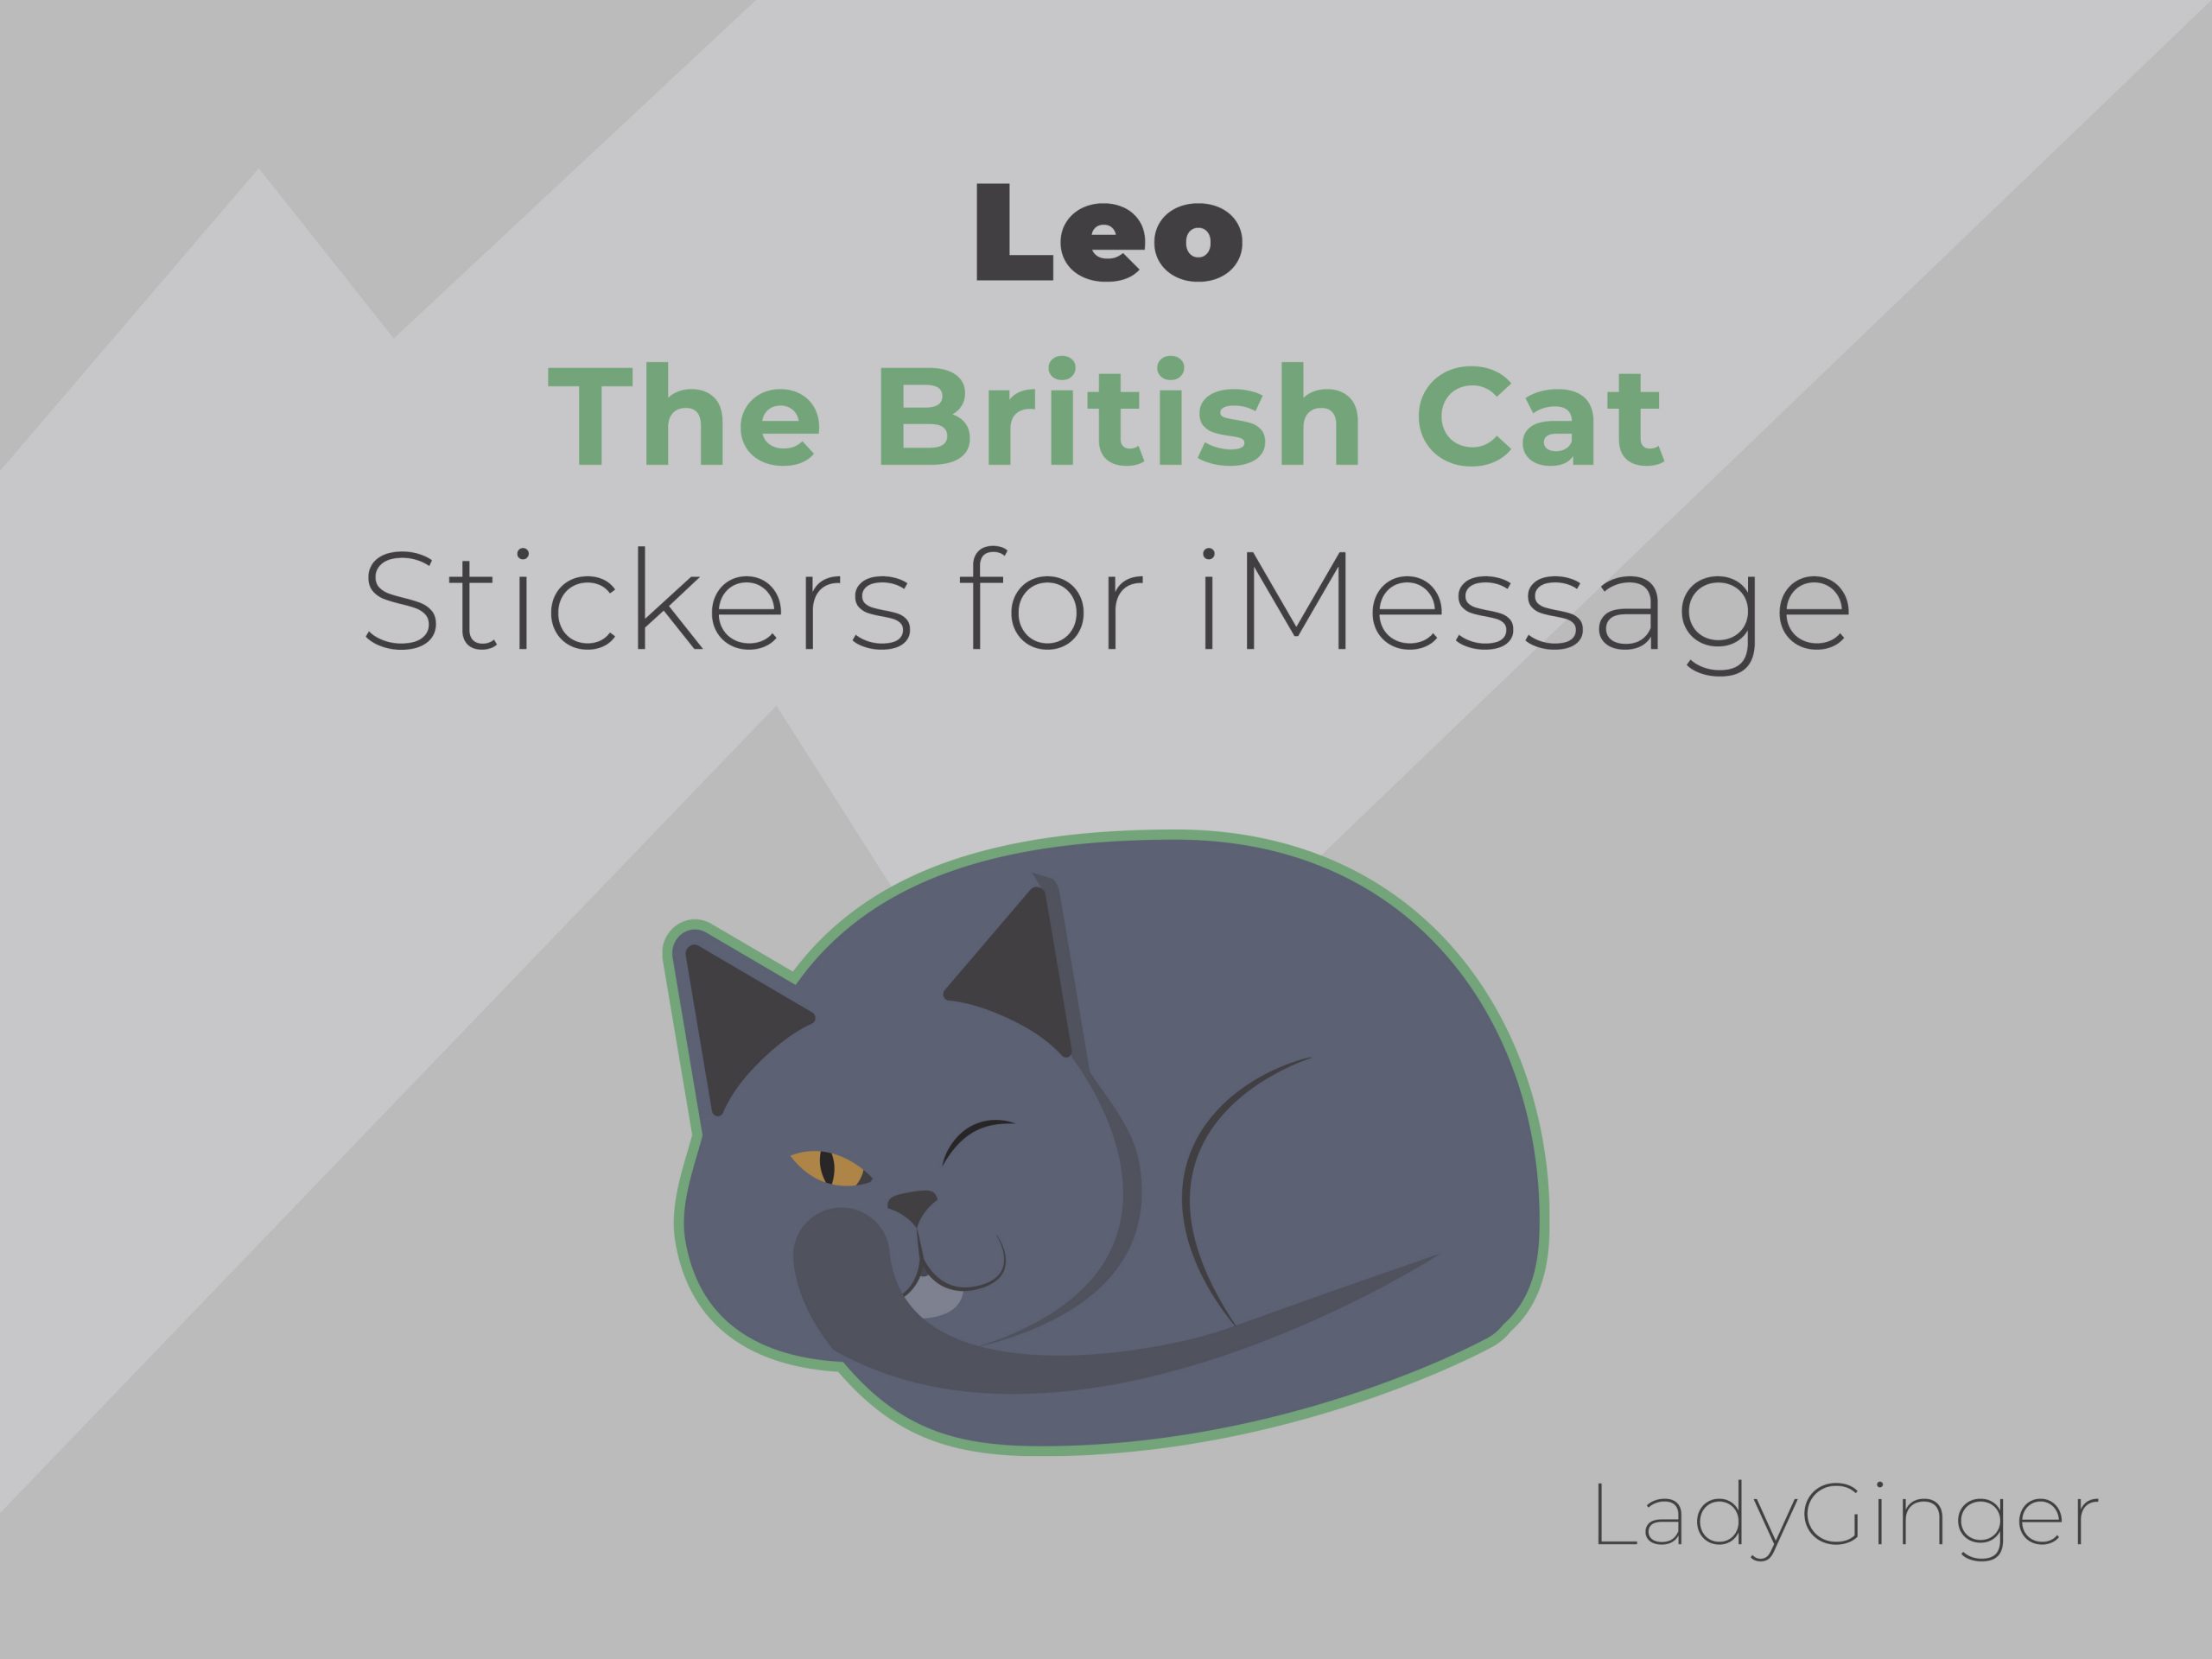 Leo the British Cat Stickers